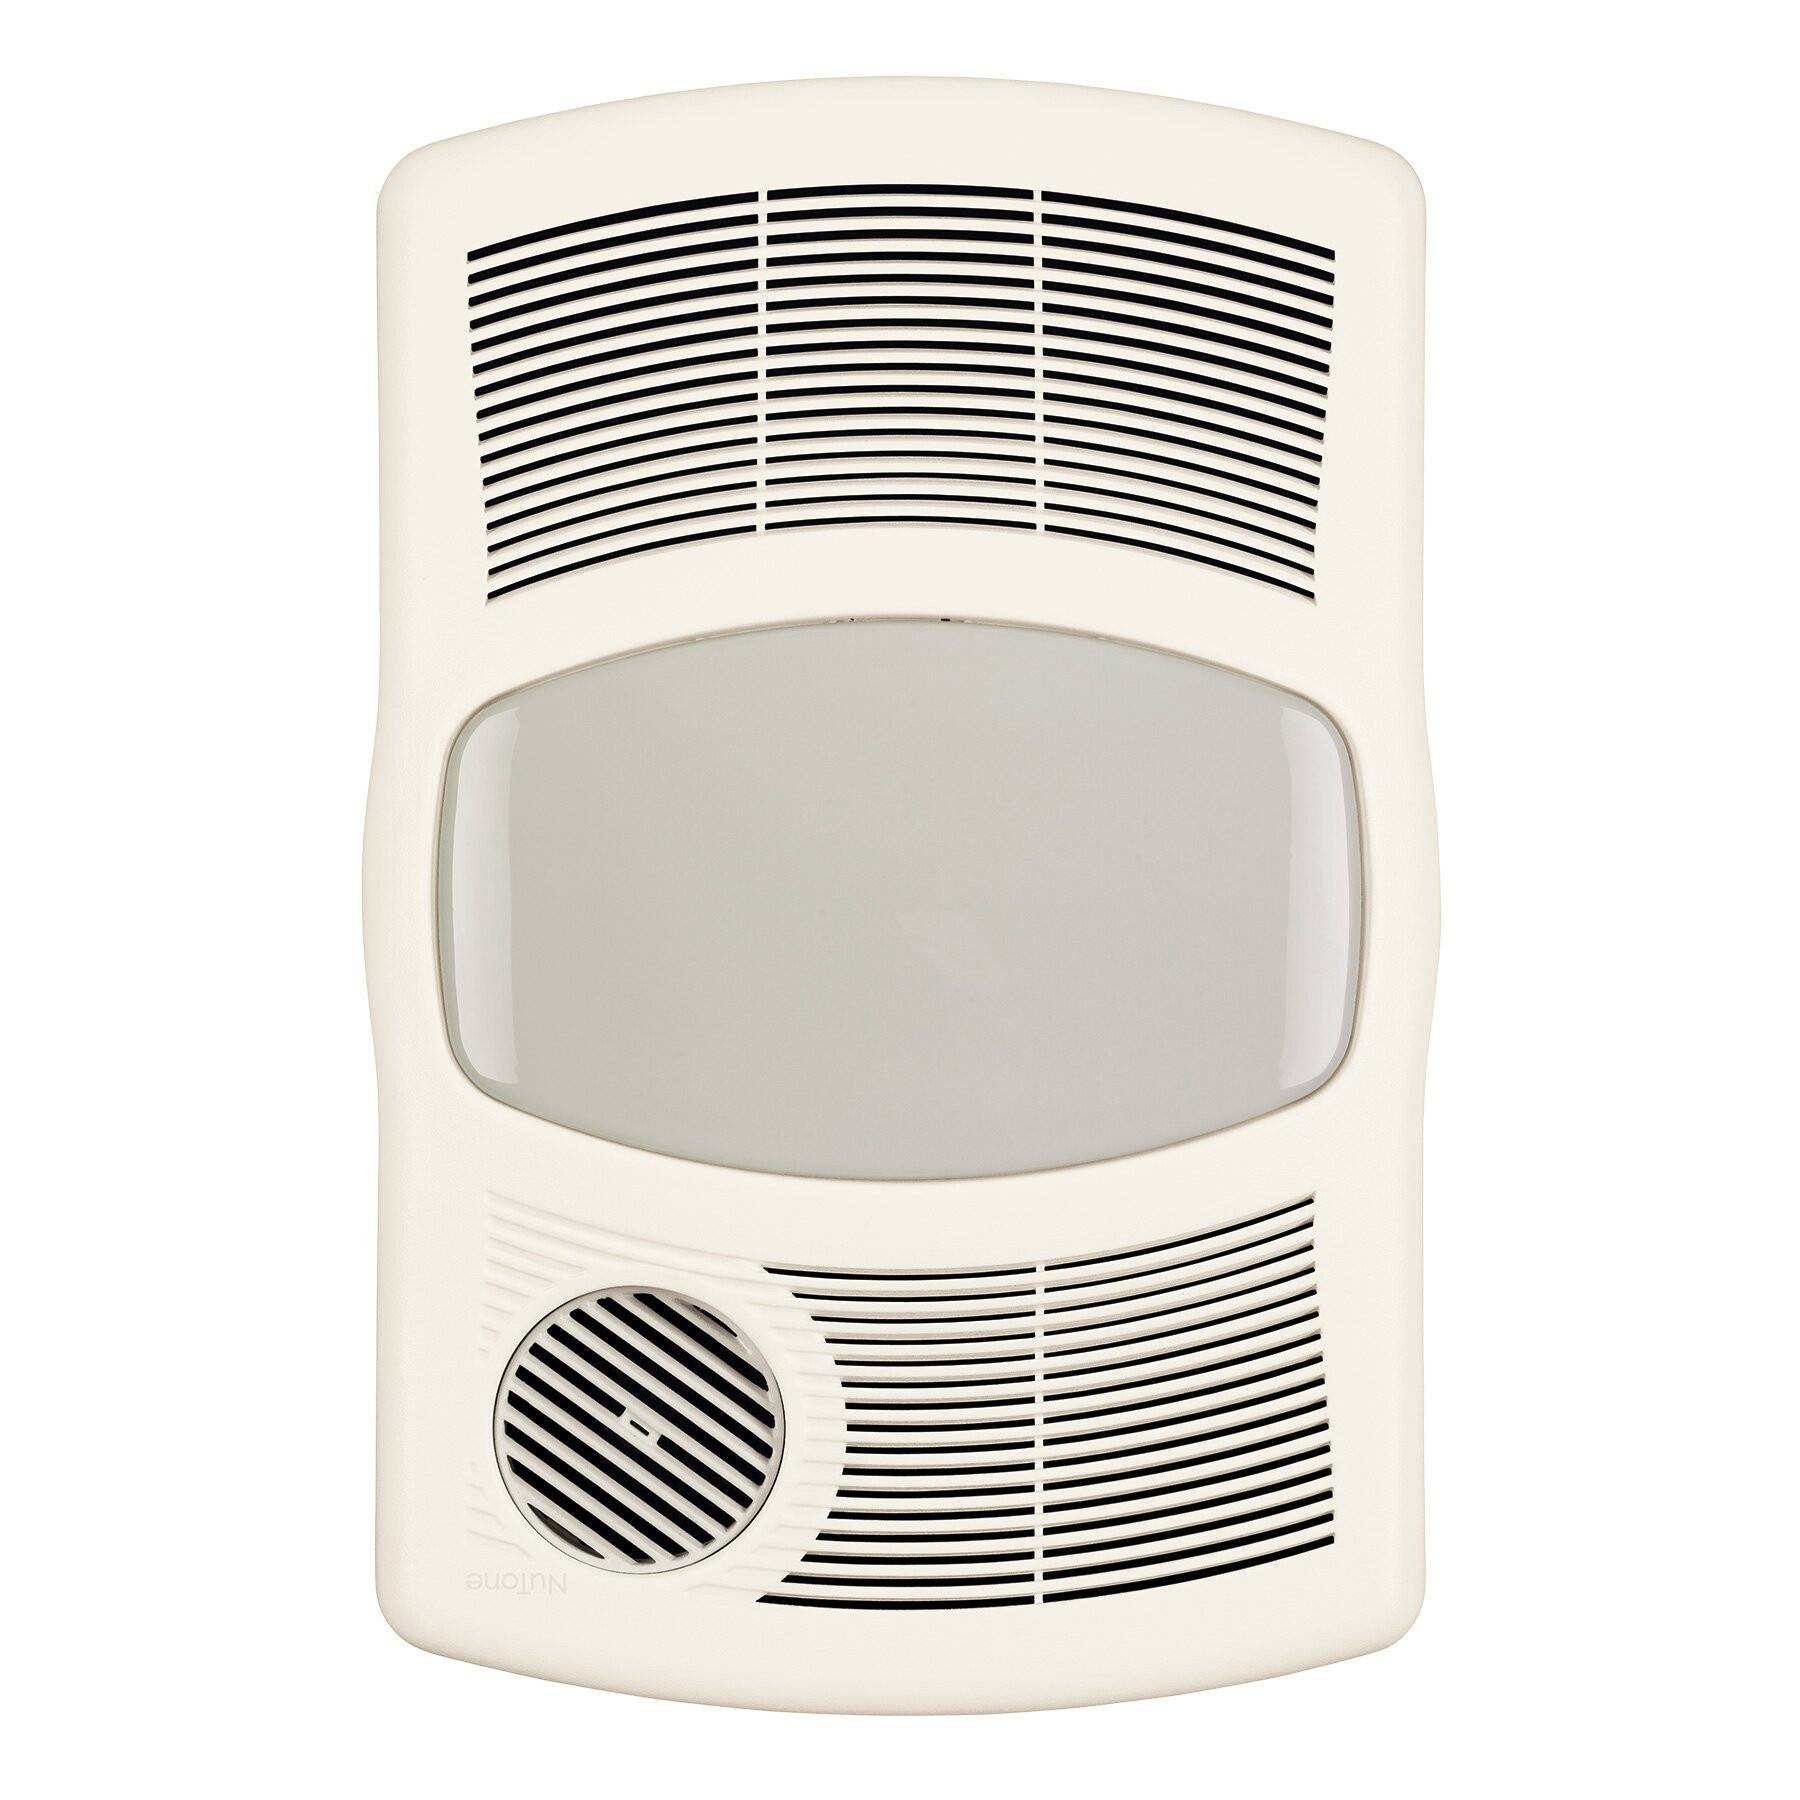 Bathroom Exhaust Fan Light Heater
 Broan 100 CFM Exhaust Bathroom Fan with Heater & Reviews